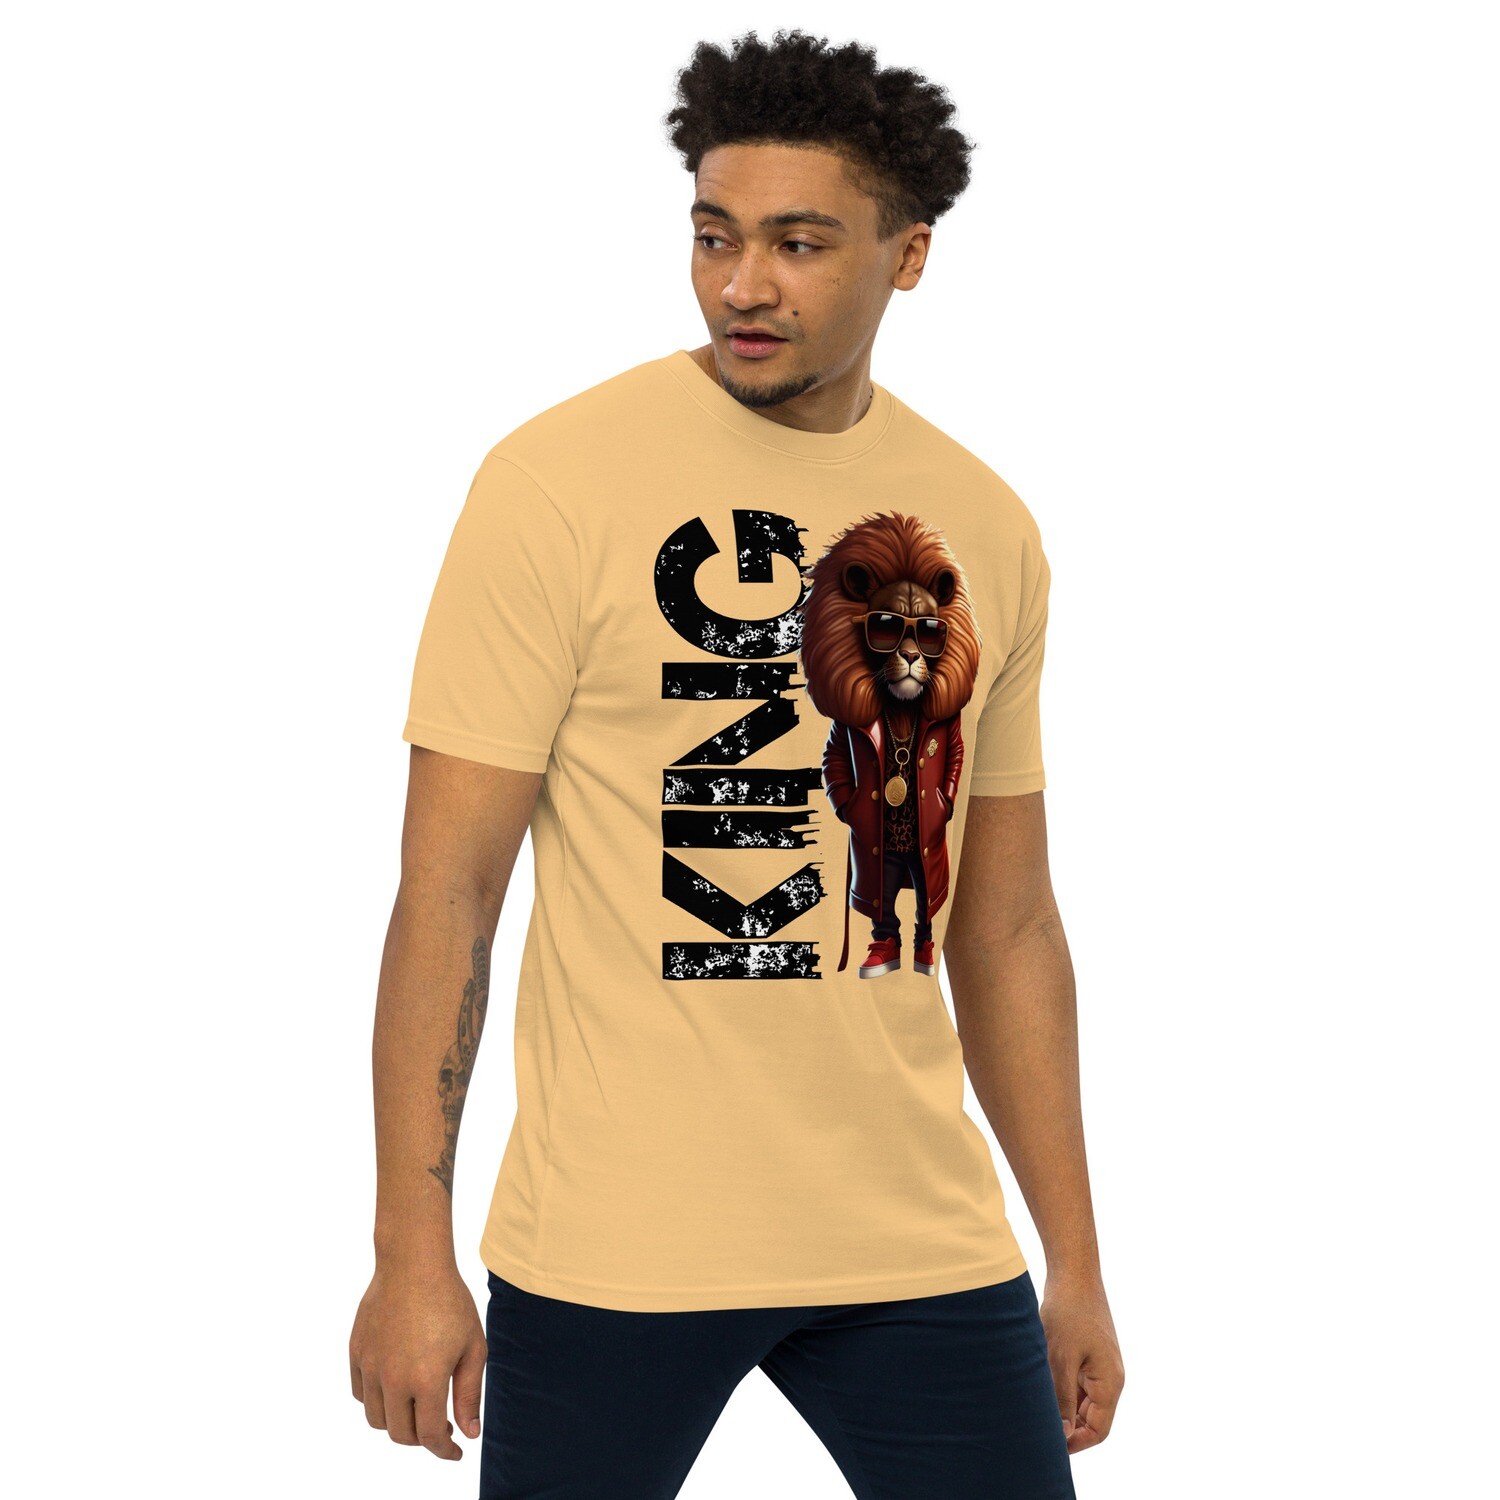 The KING L T-shirts